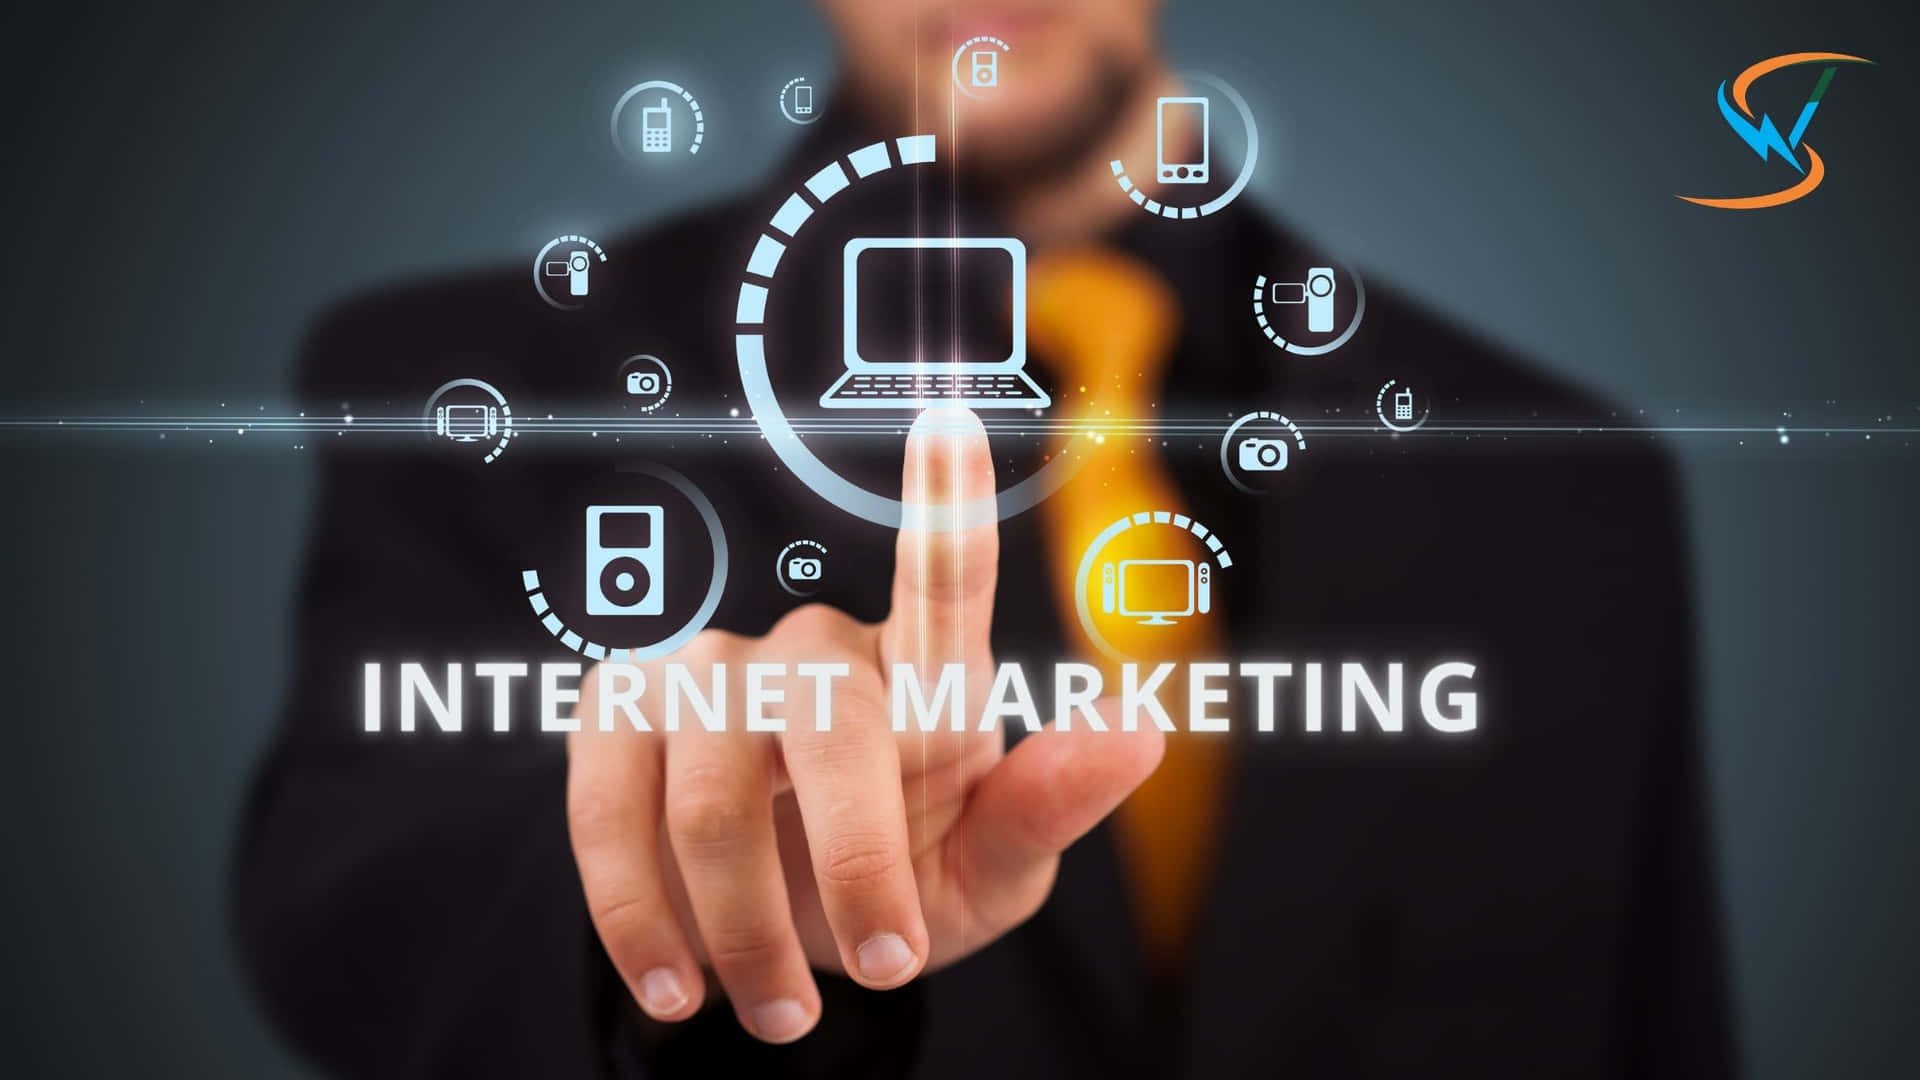 Internet Marketing - What Is It? Wallpaper